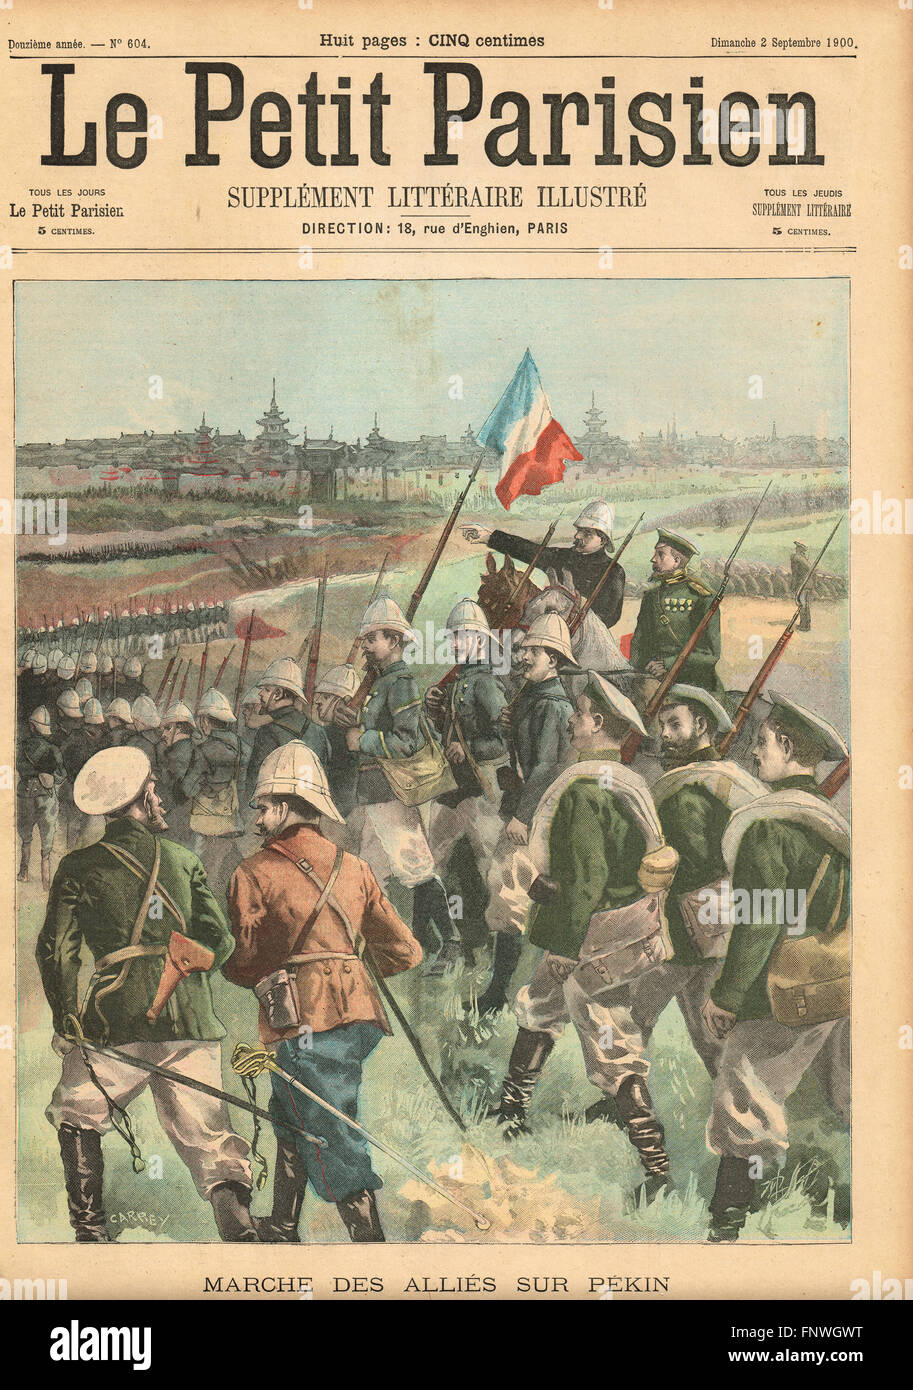 Boxer rebellion Allies march on Peking.  French illustrated newspaper Le Petit Parisien illustration Stock Photo